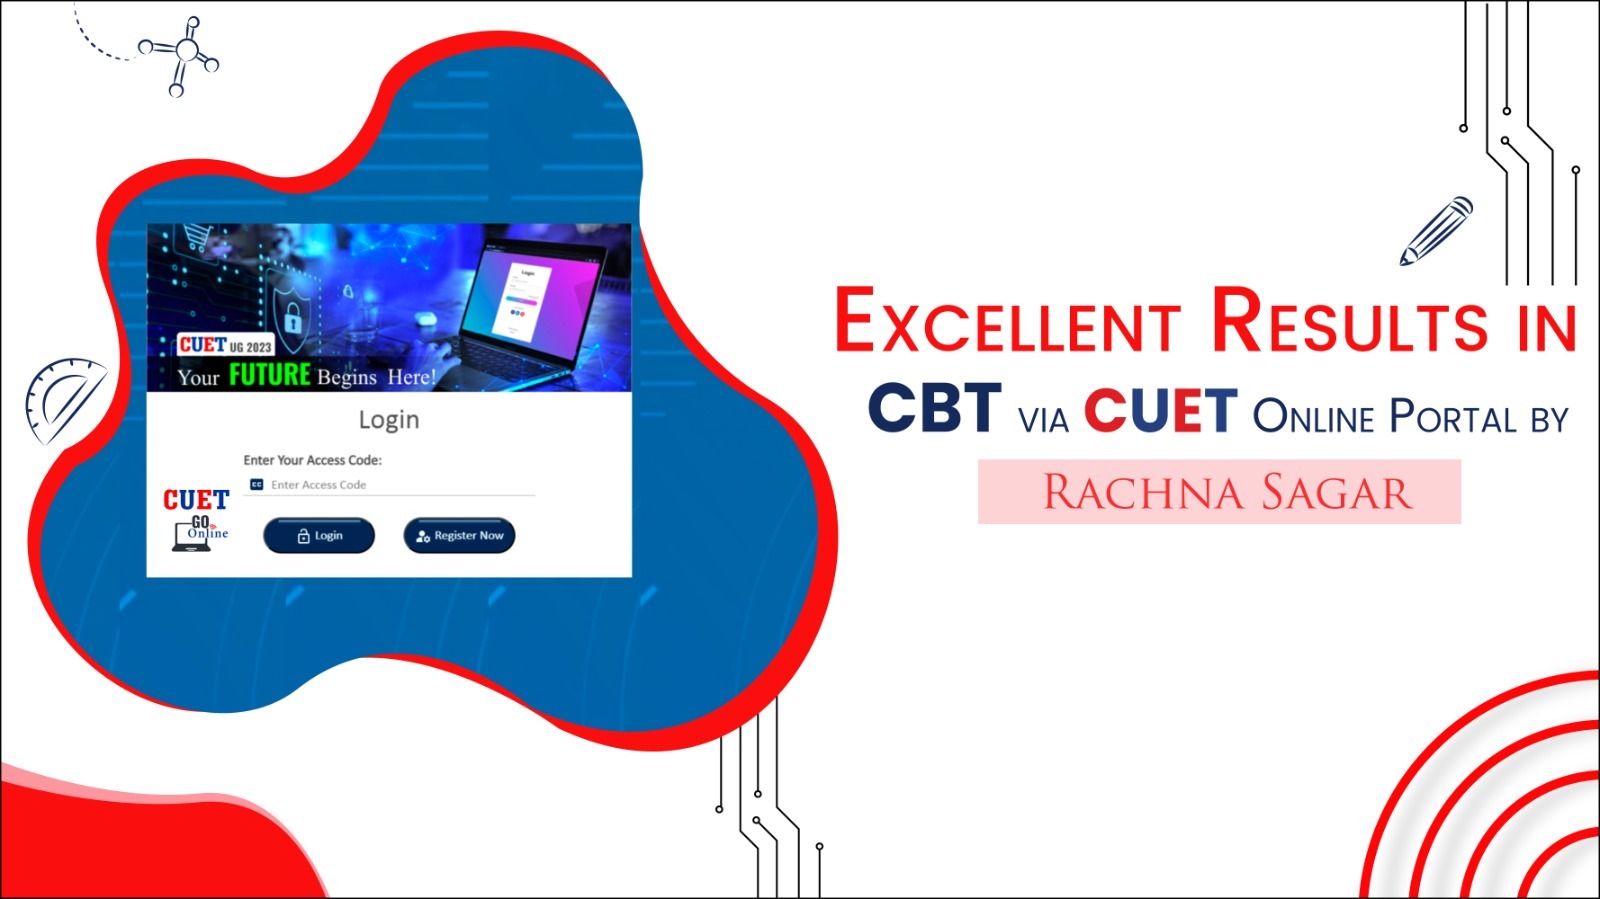 CUET Online Portal